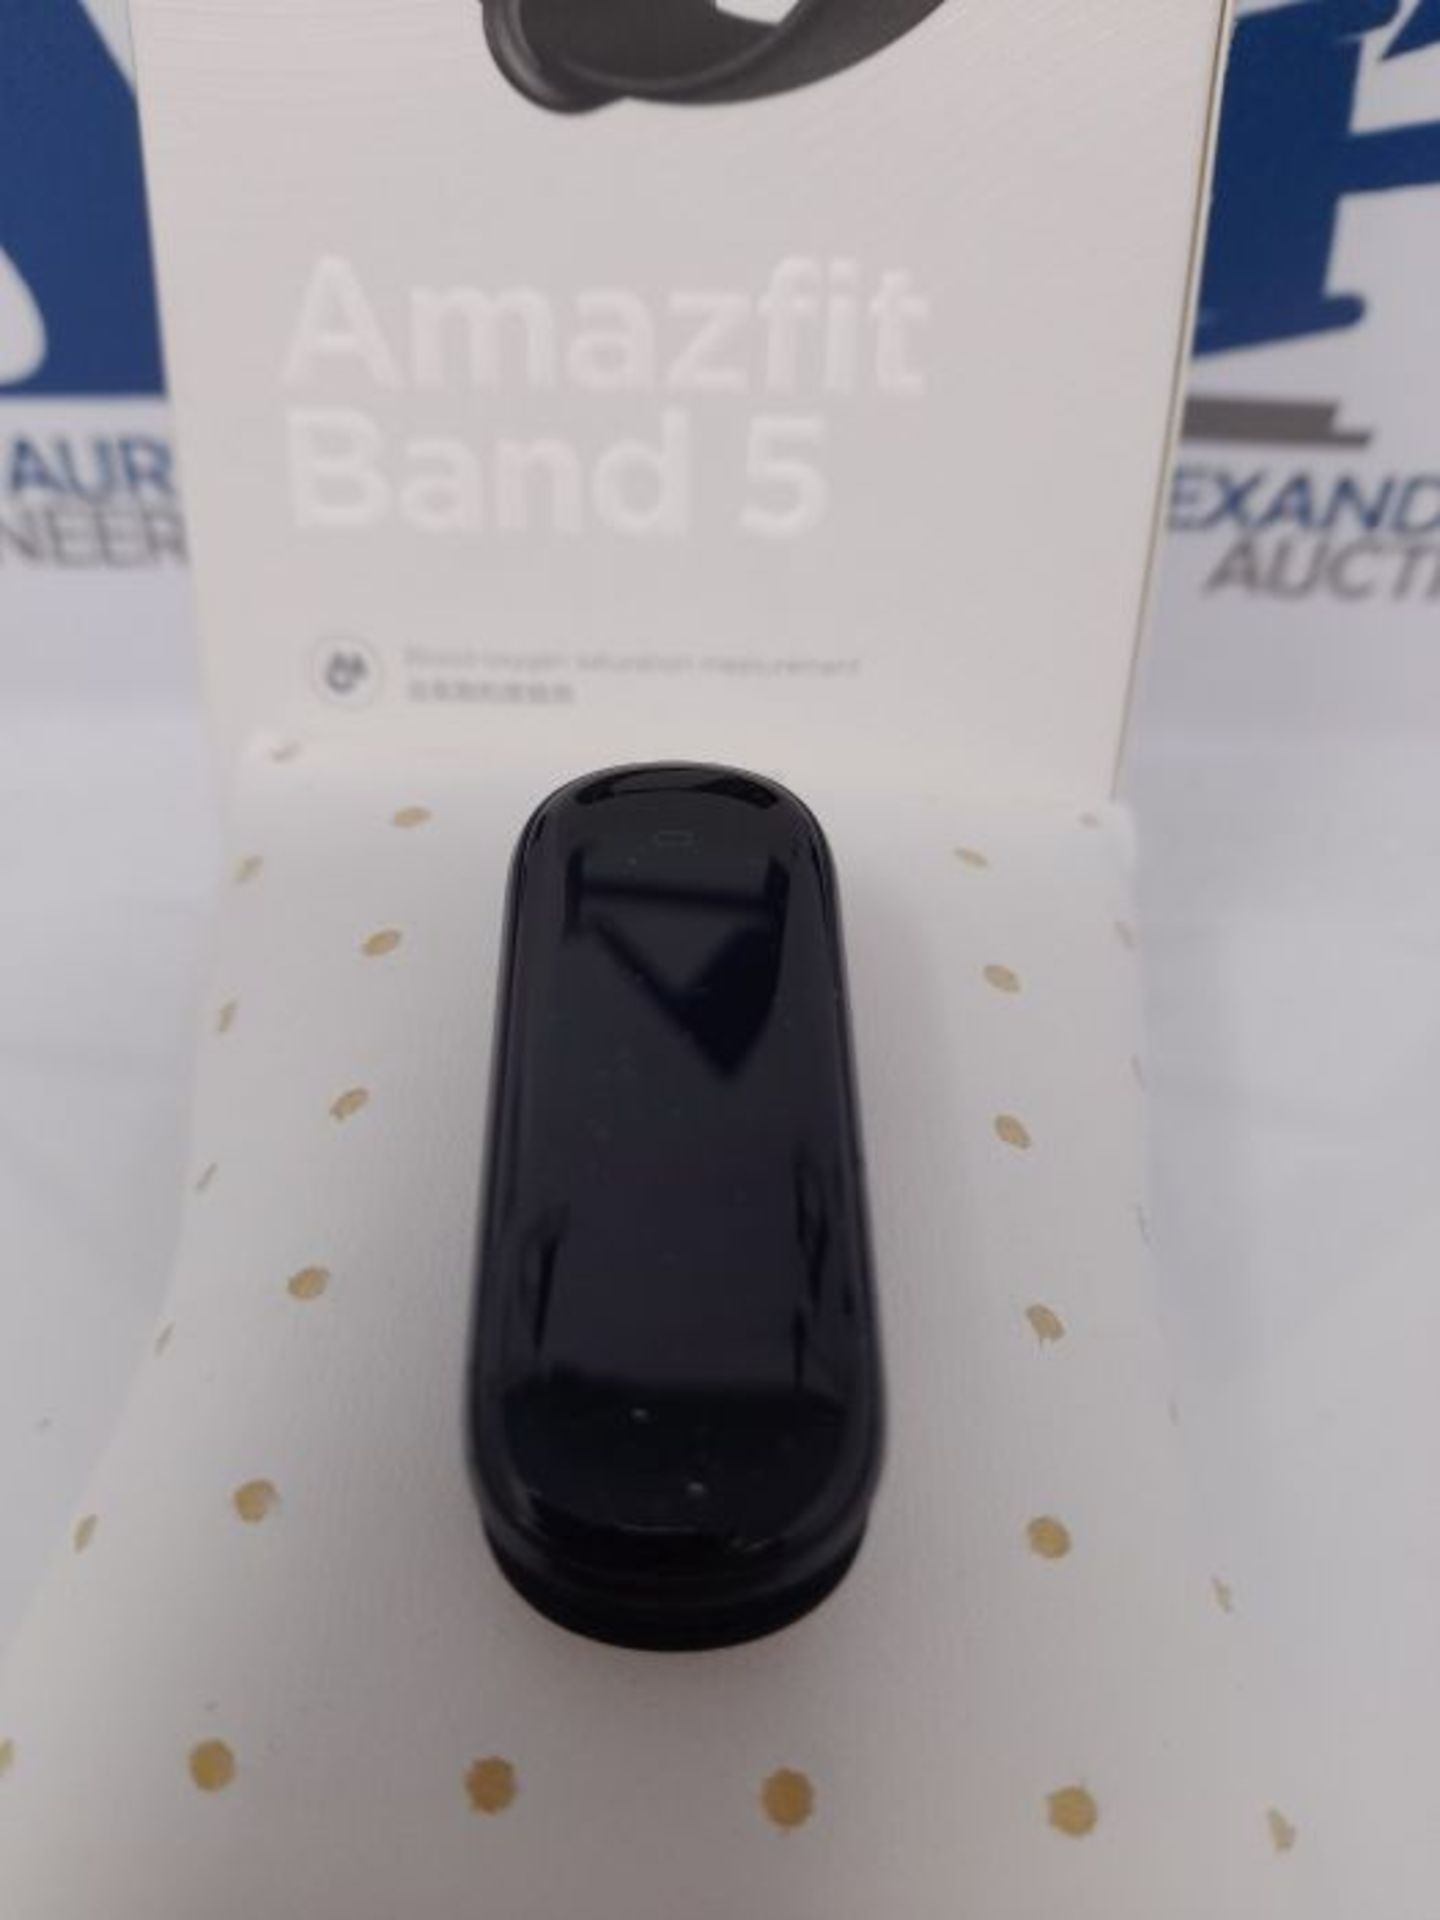 Amazfit Band 5 Smartwatch Tracker Fitness Orologio Sport Smartband con Alexa Integrato - Image 3 of 3